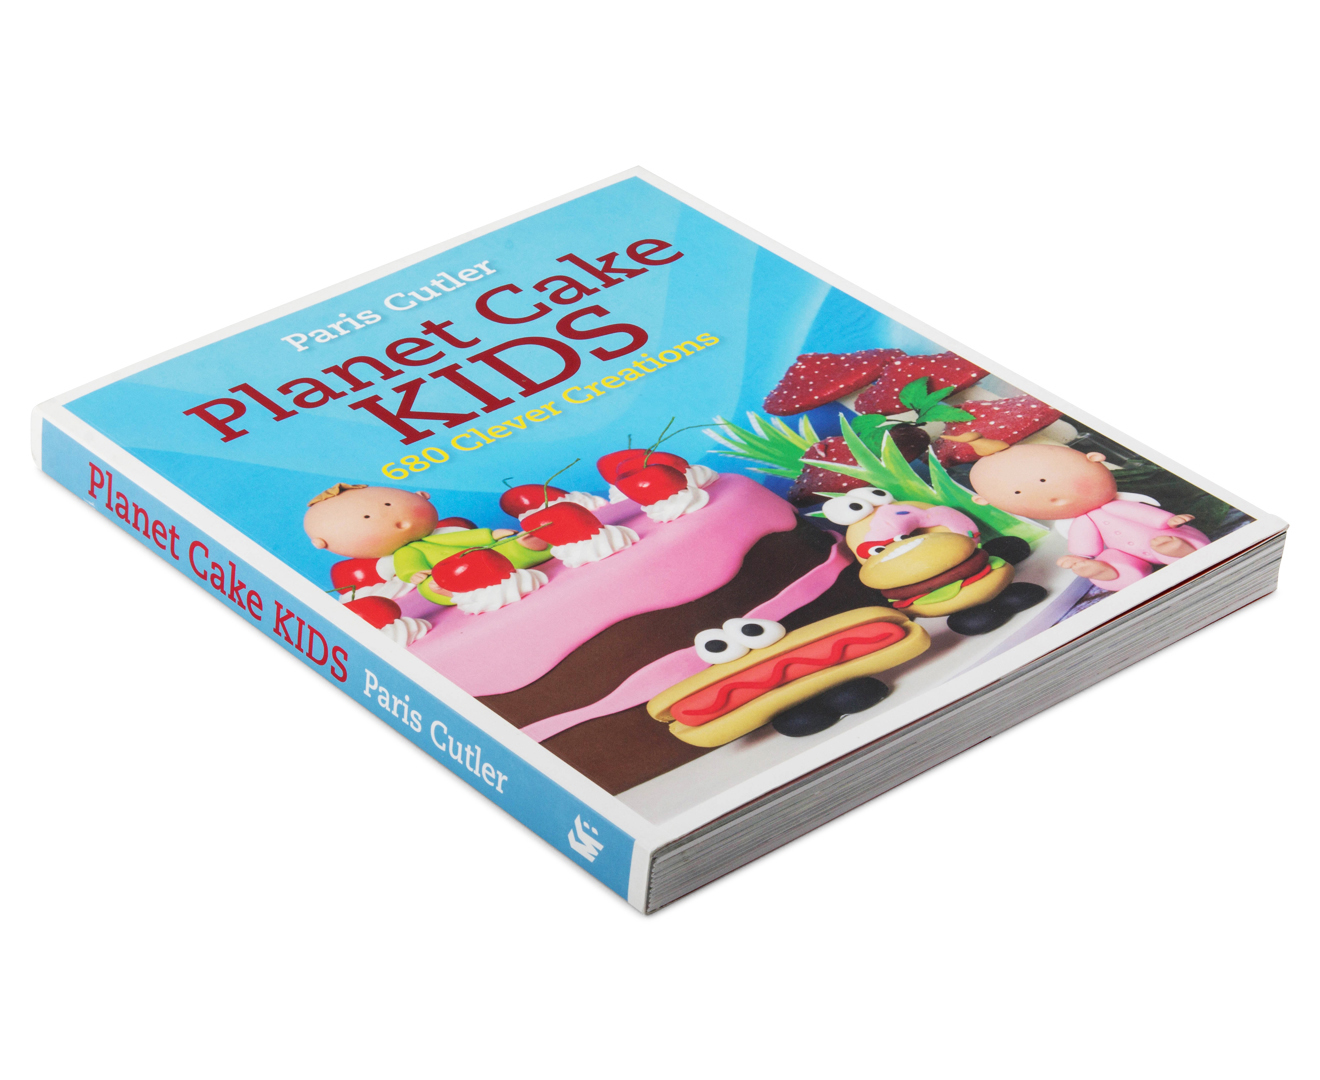 Planet Cake Love and Friendship: Celebration Cake Decorating Recipe Cookbook  | eBay